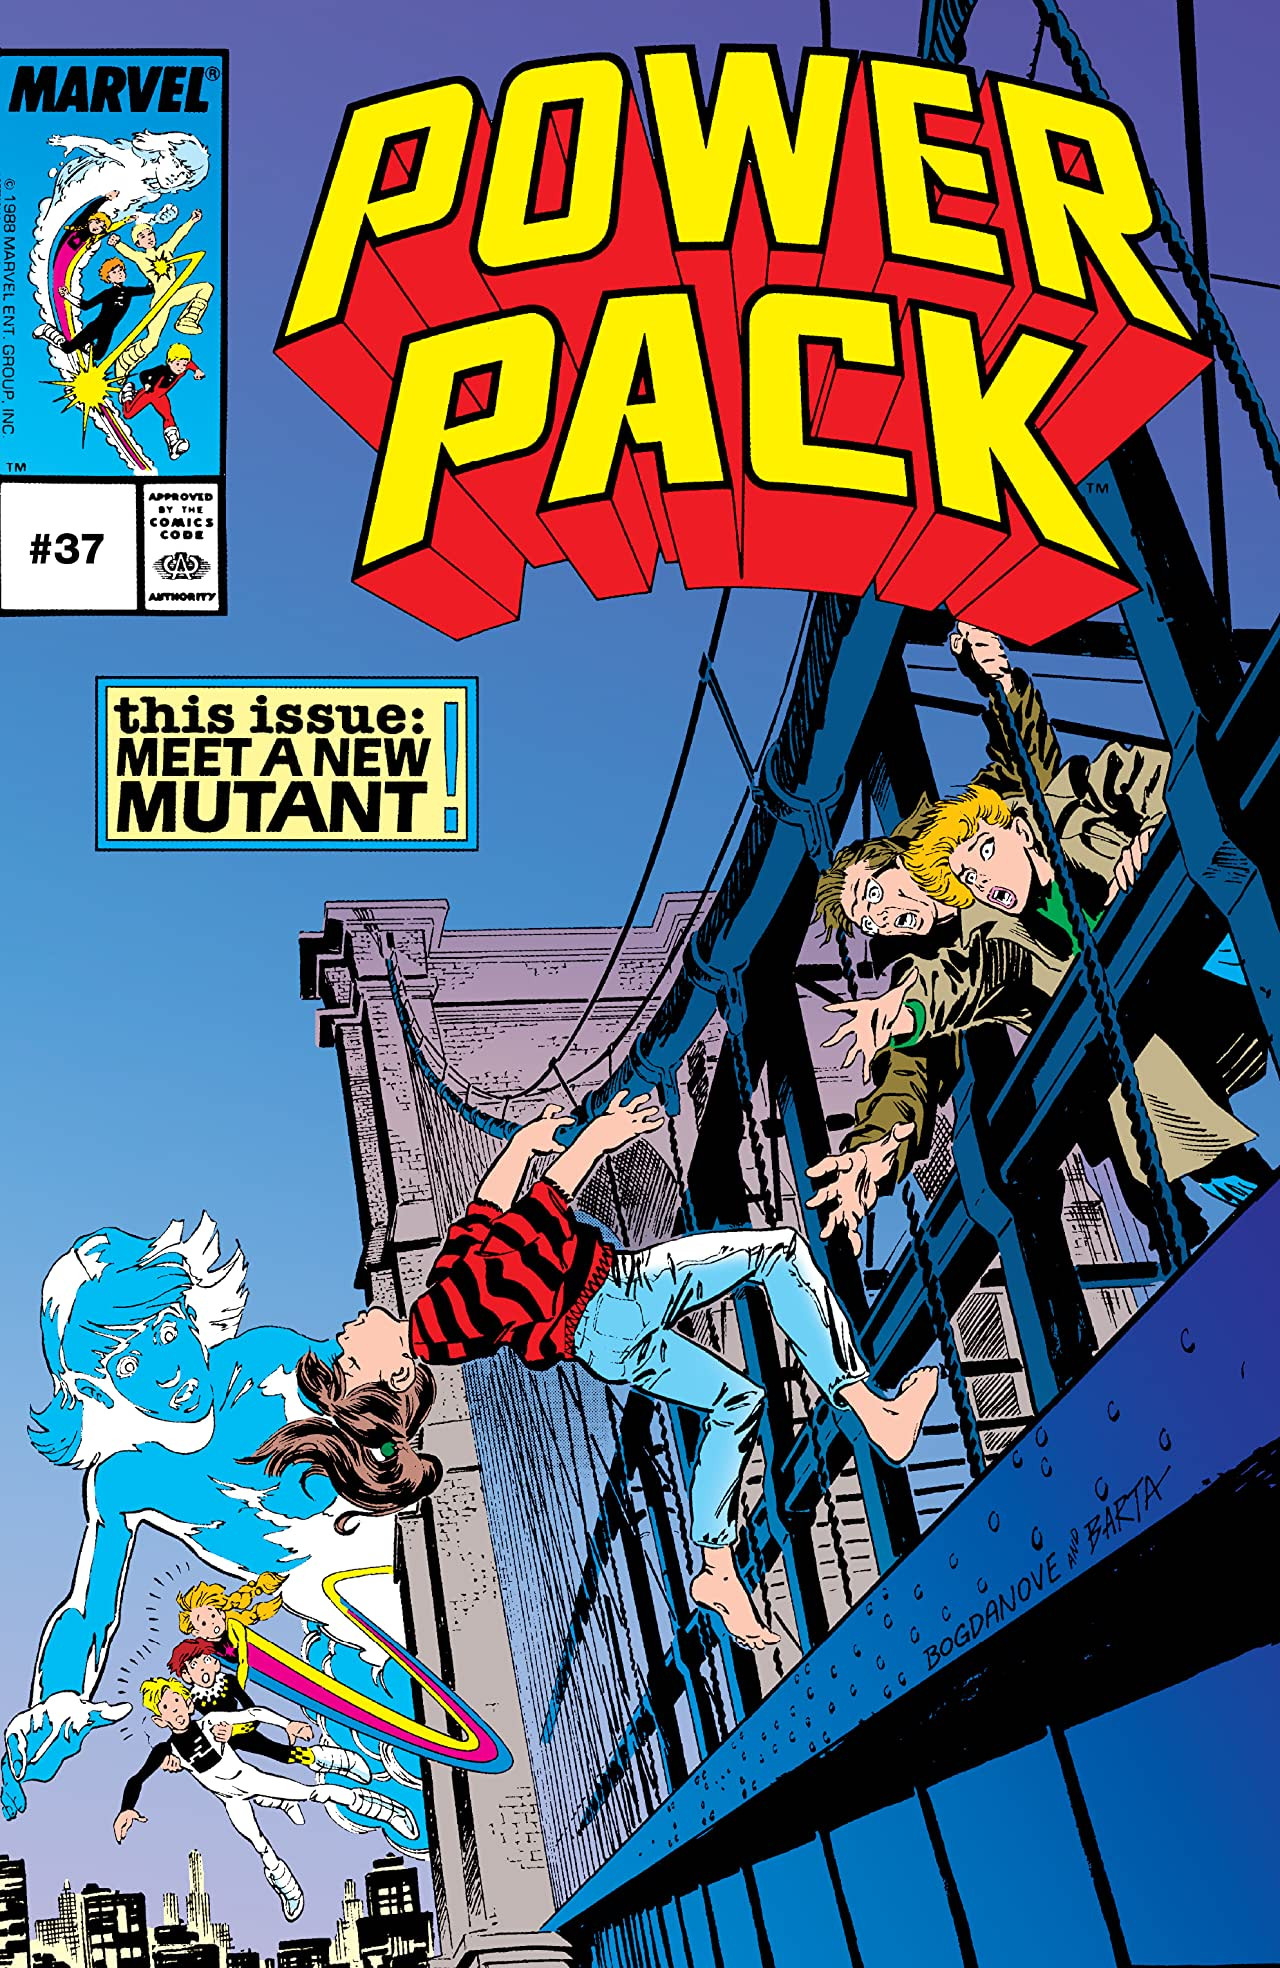 Power packing комиксы. Power Pack Marvel Comics.